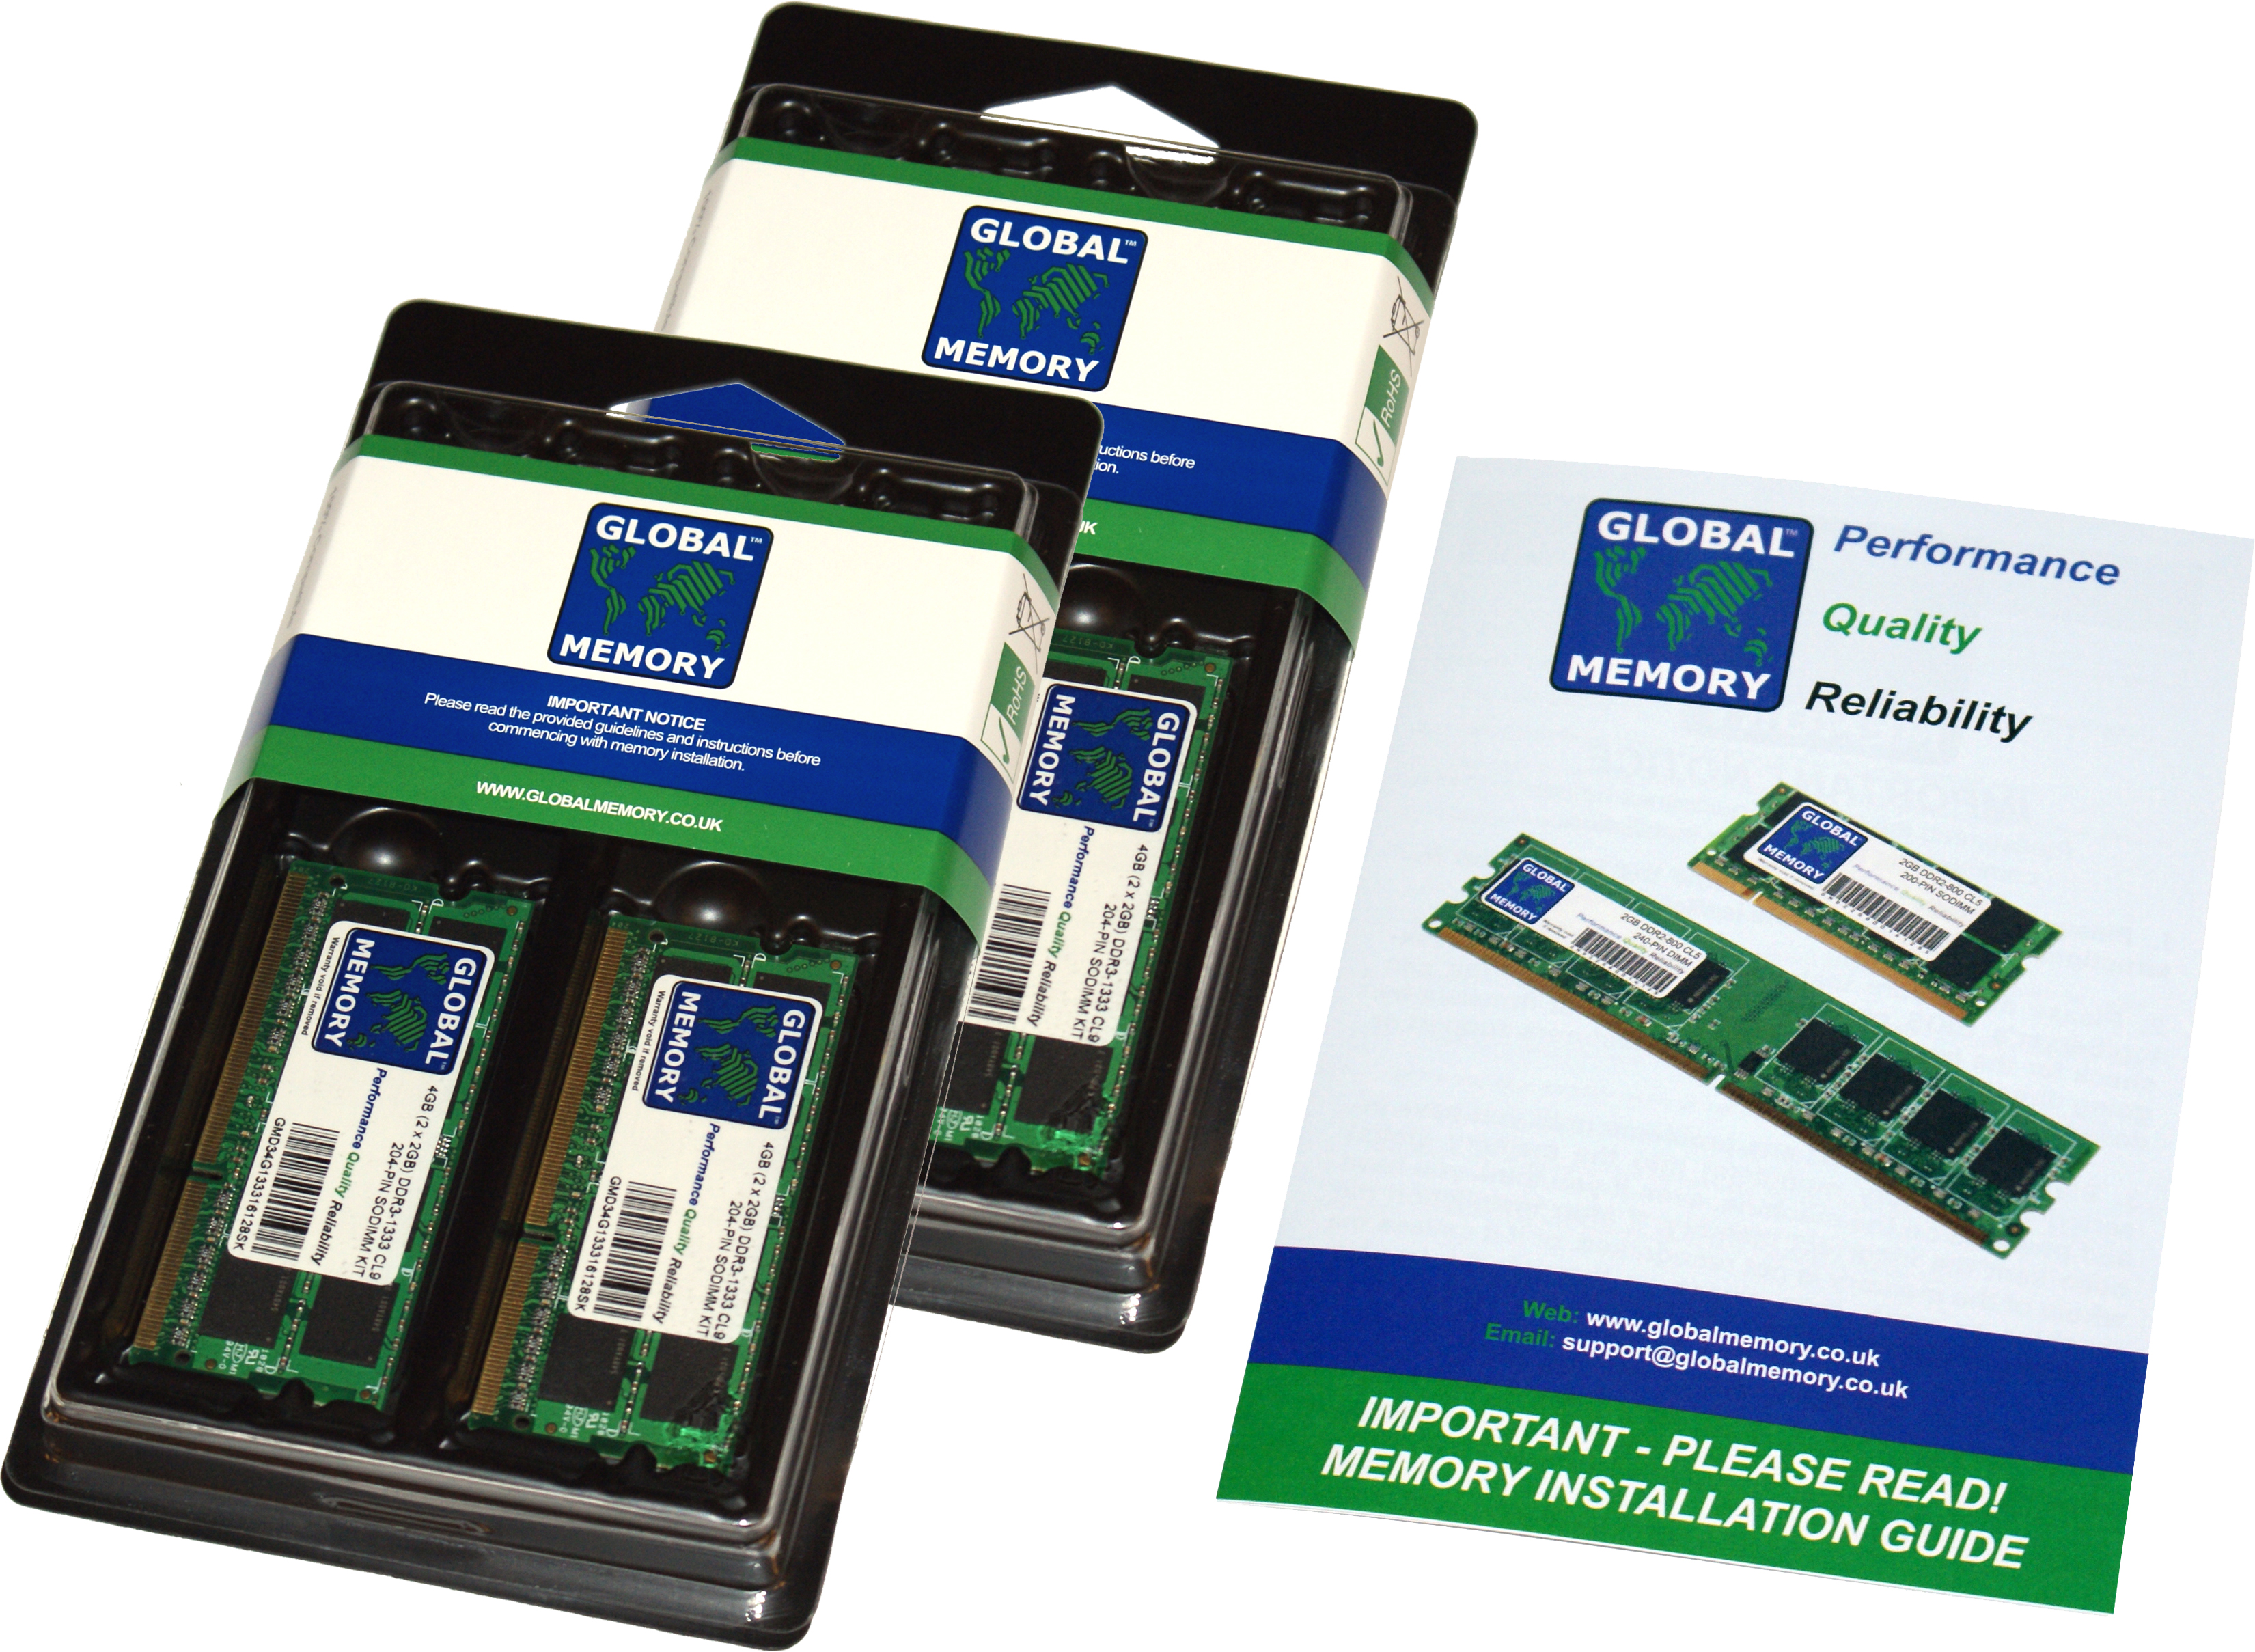 128GB (4 x 32GB) DDR4 2933MHz PC4-23400 260-PIN SODIMM MEMORY RAM KIT FOR HEWLETT-PACKARD LAPTOPS/NOTEBOOKS